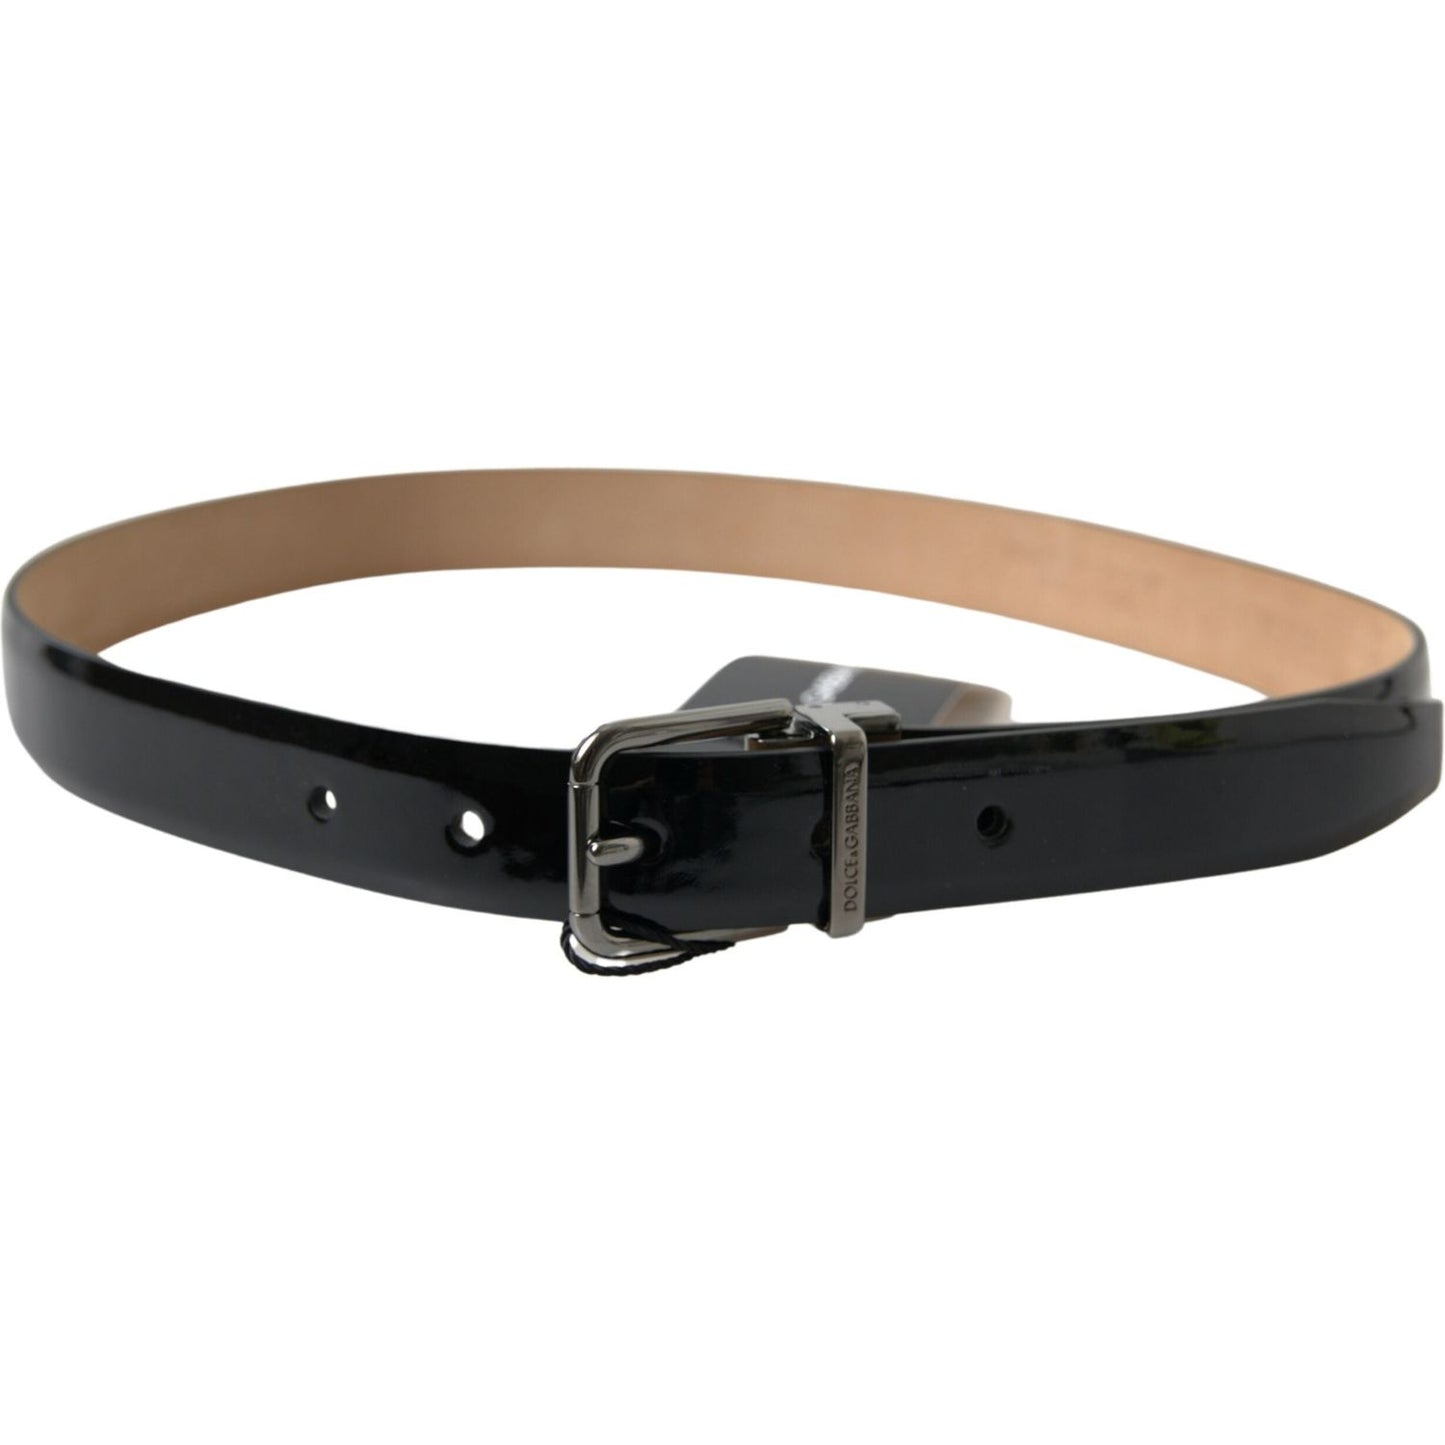 Dolce & Gabbana Elegant Black Leather Belt with Metal Buckle black-calf-leather-metal-buckle-men-belt 465A4489-scaled-ae6fbd64-225.jpg